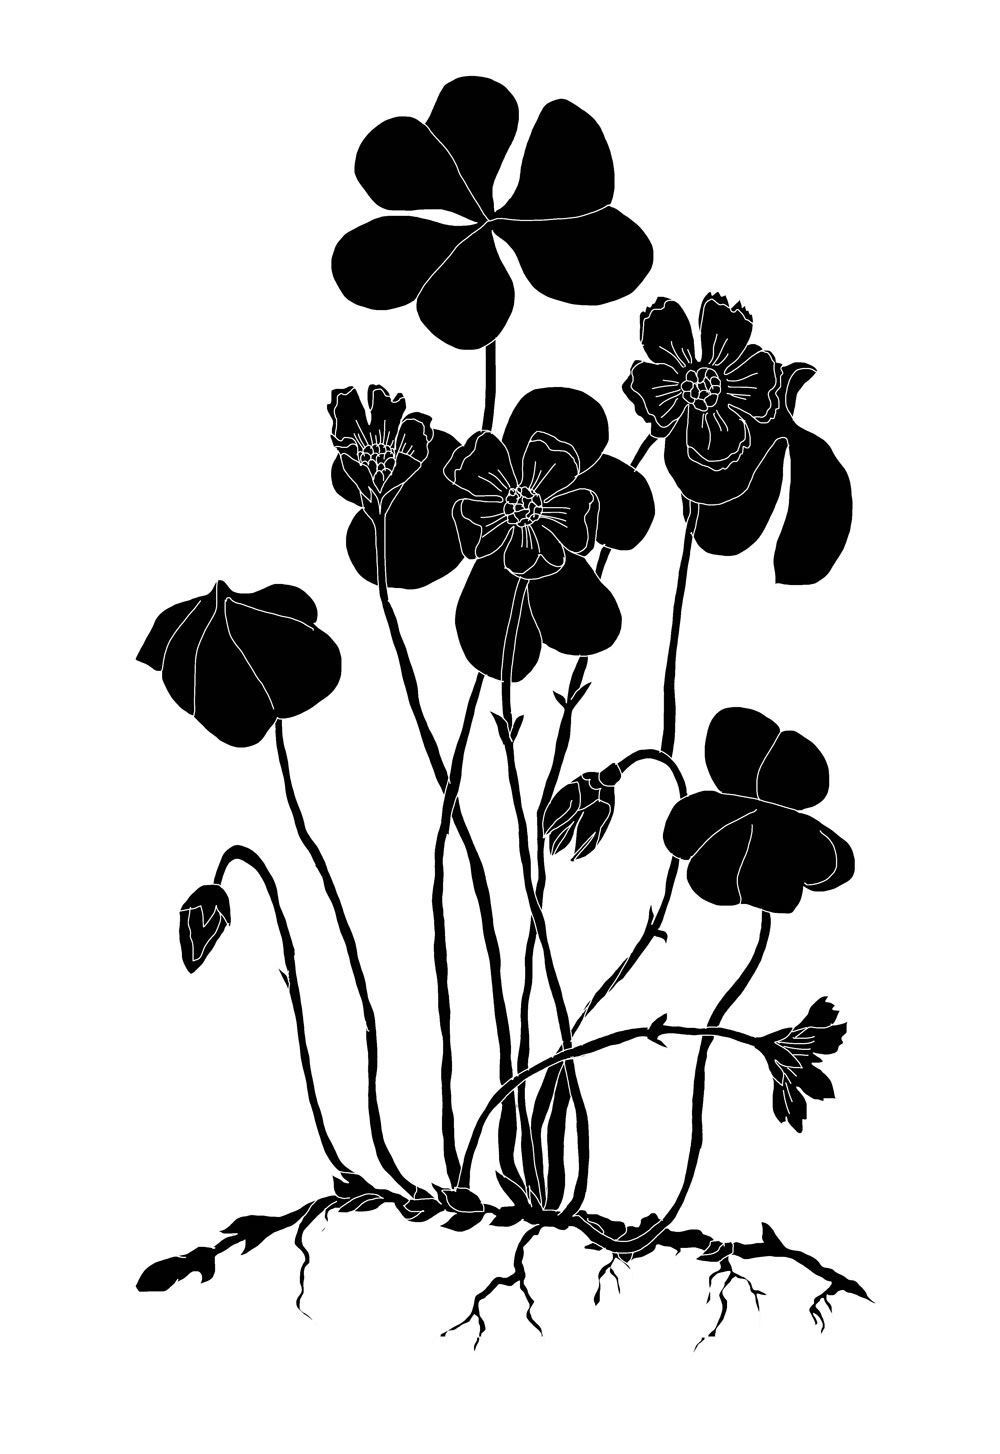 Flowers black